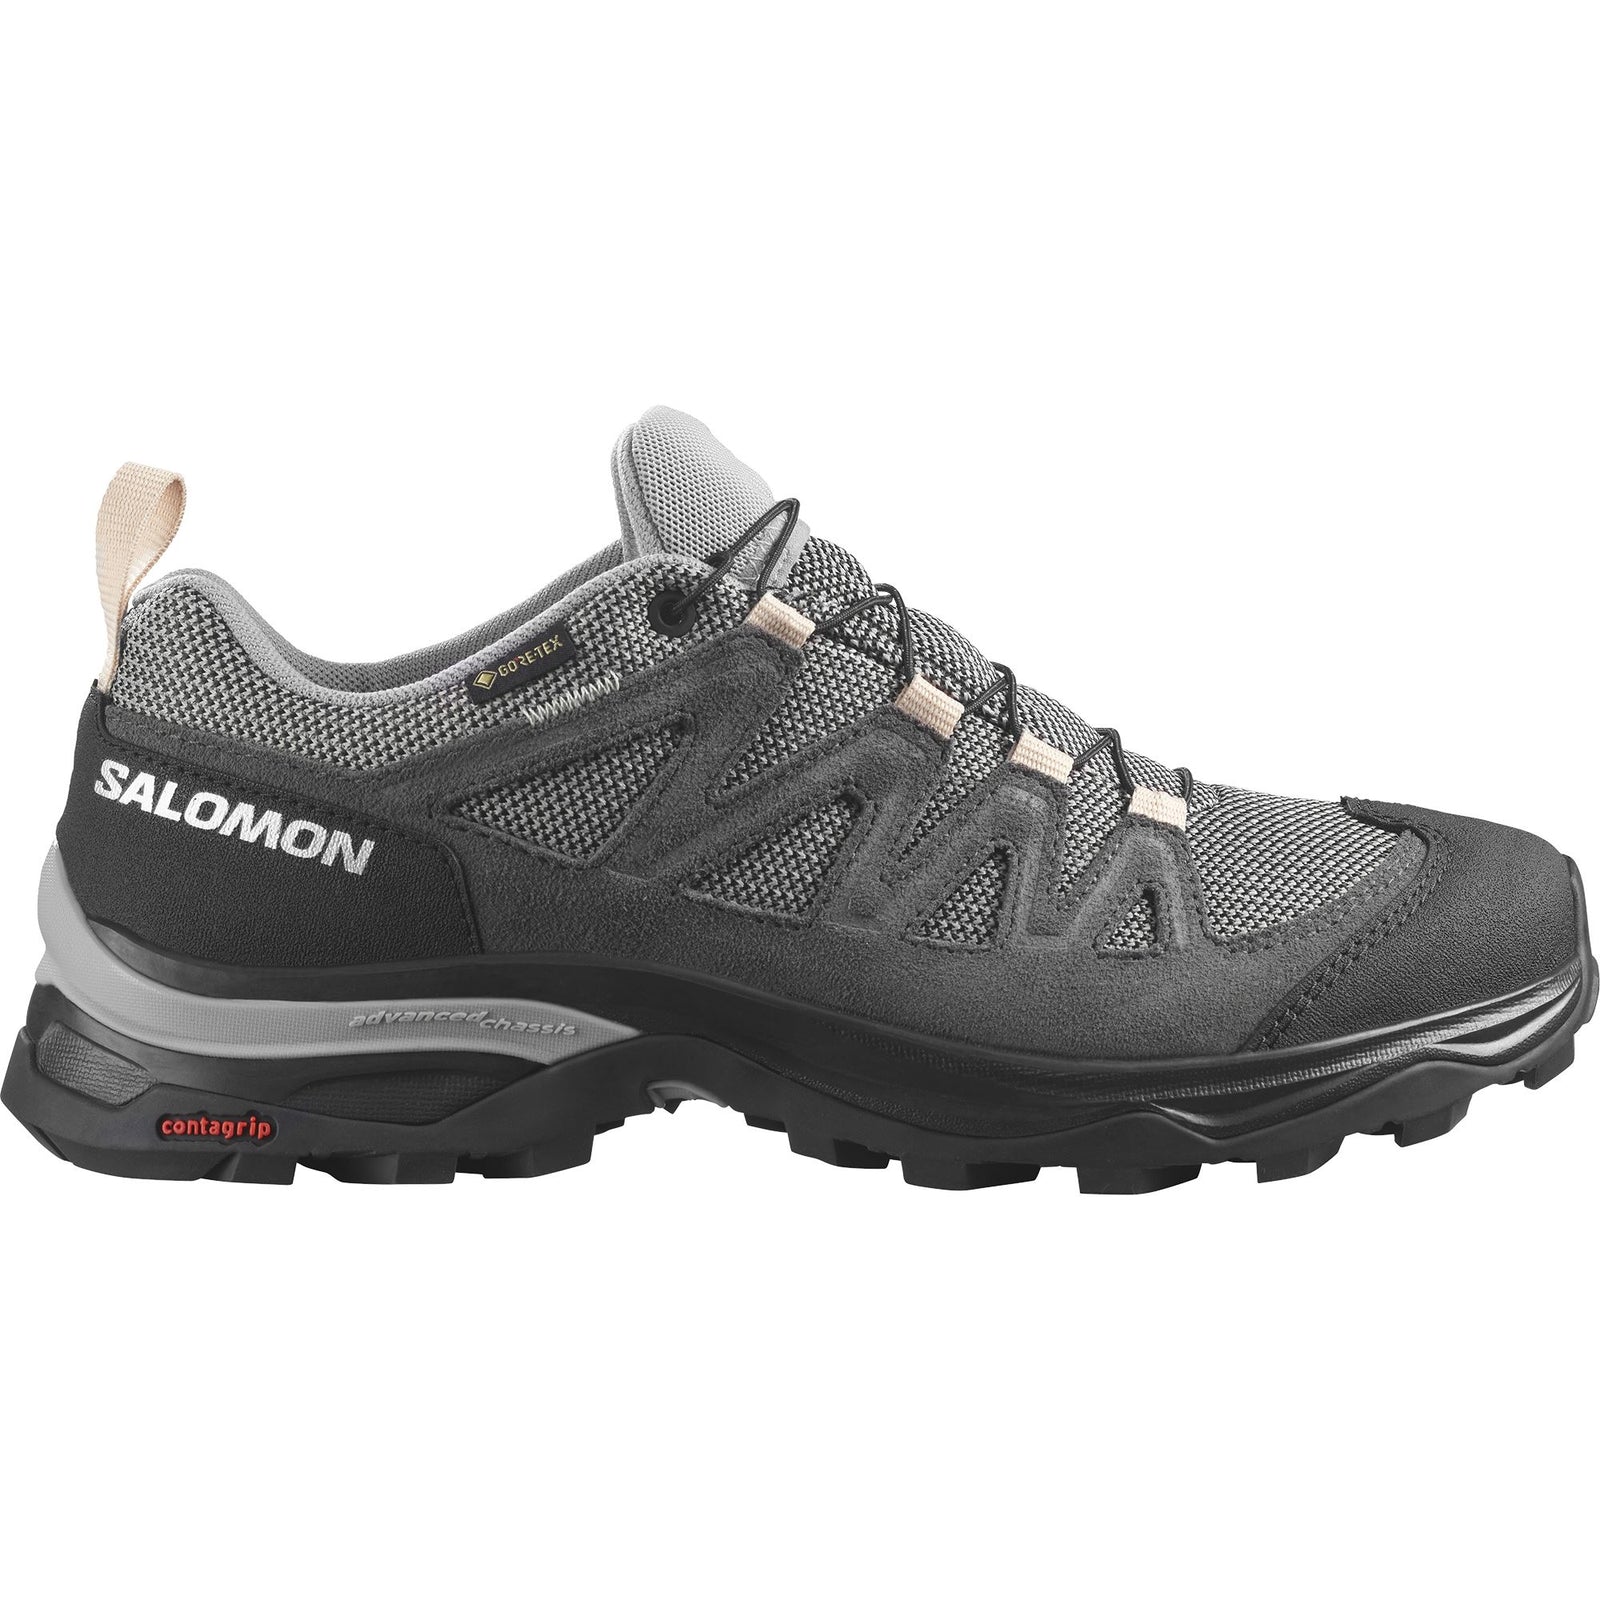 Salomon X Ward Leather Gore-Tex Women's Leather Hiking Shoes Gull/Black/Ebony US 7 